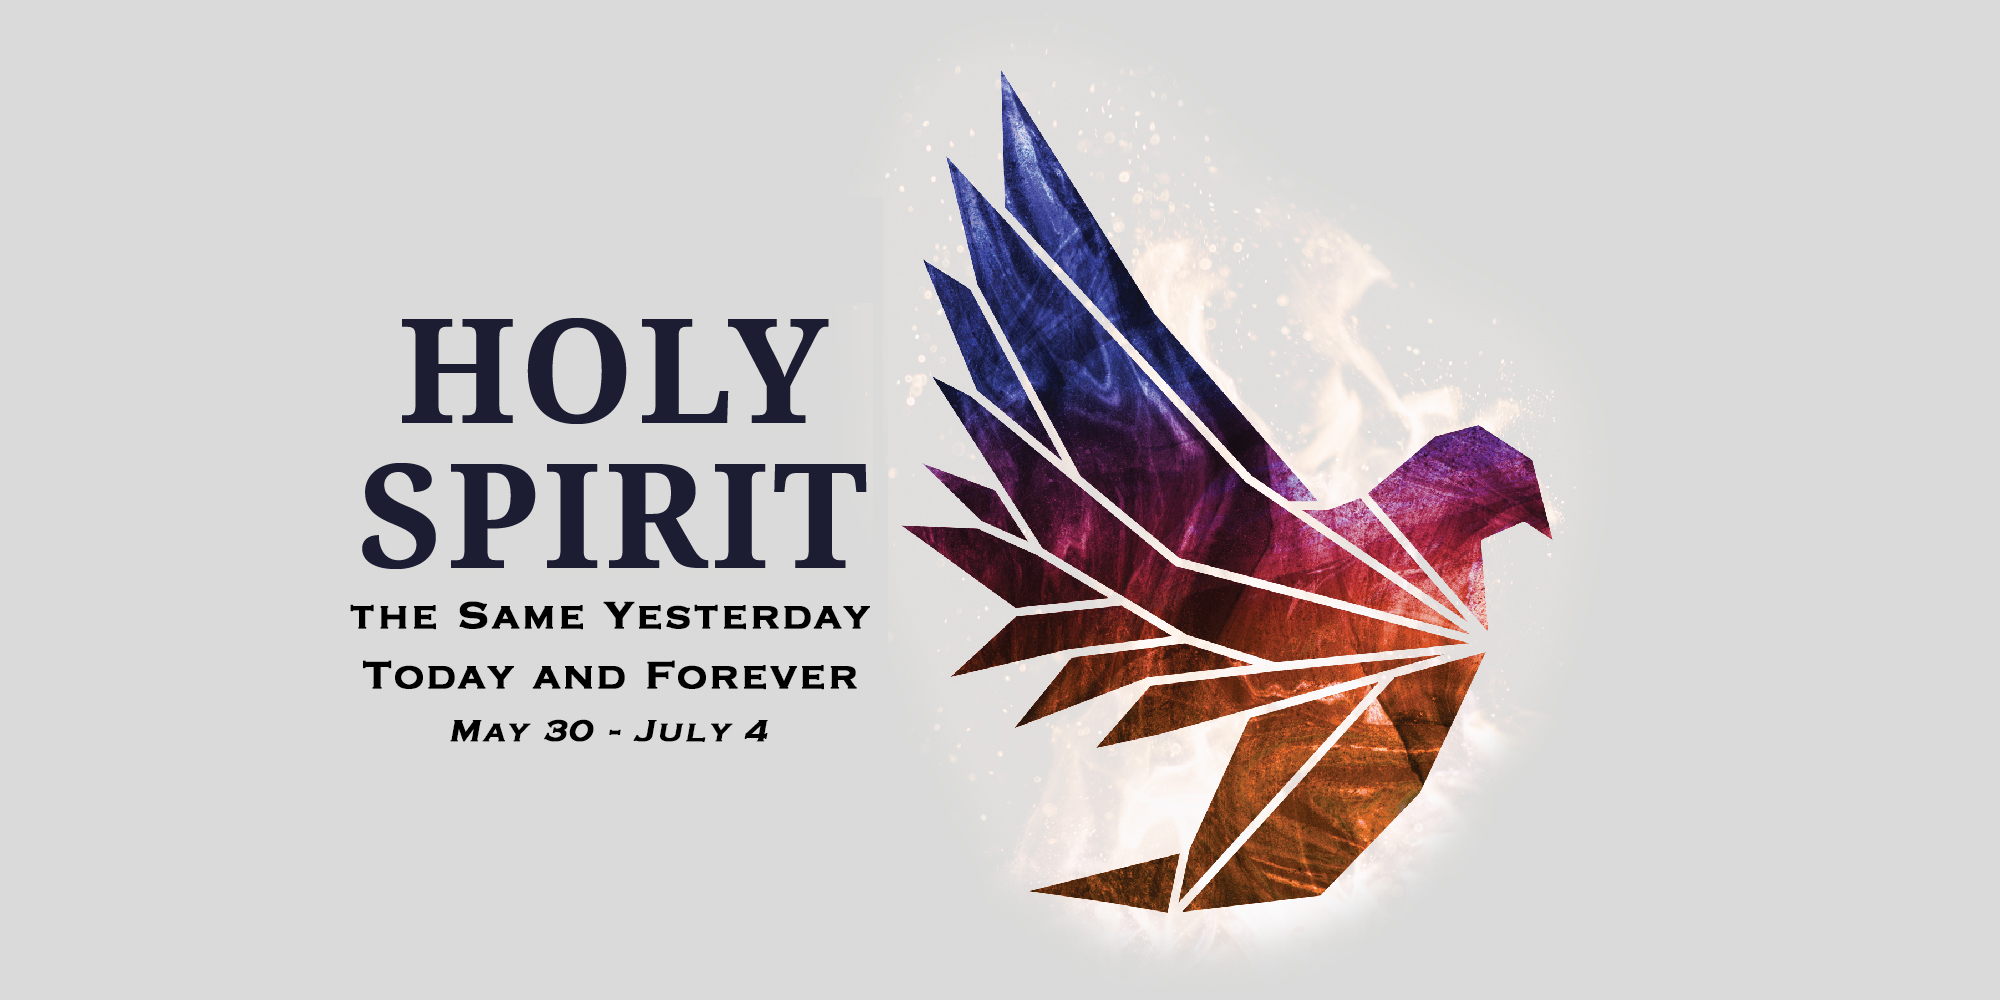 The Holy Spirit Speaks Today